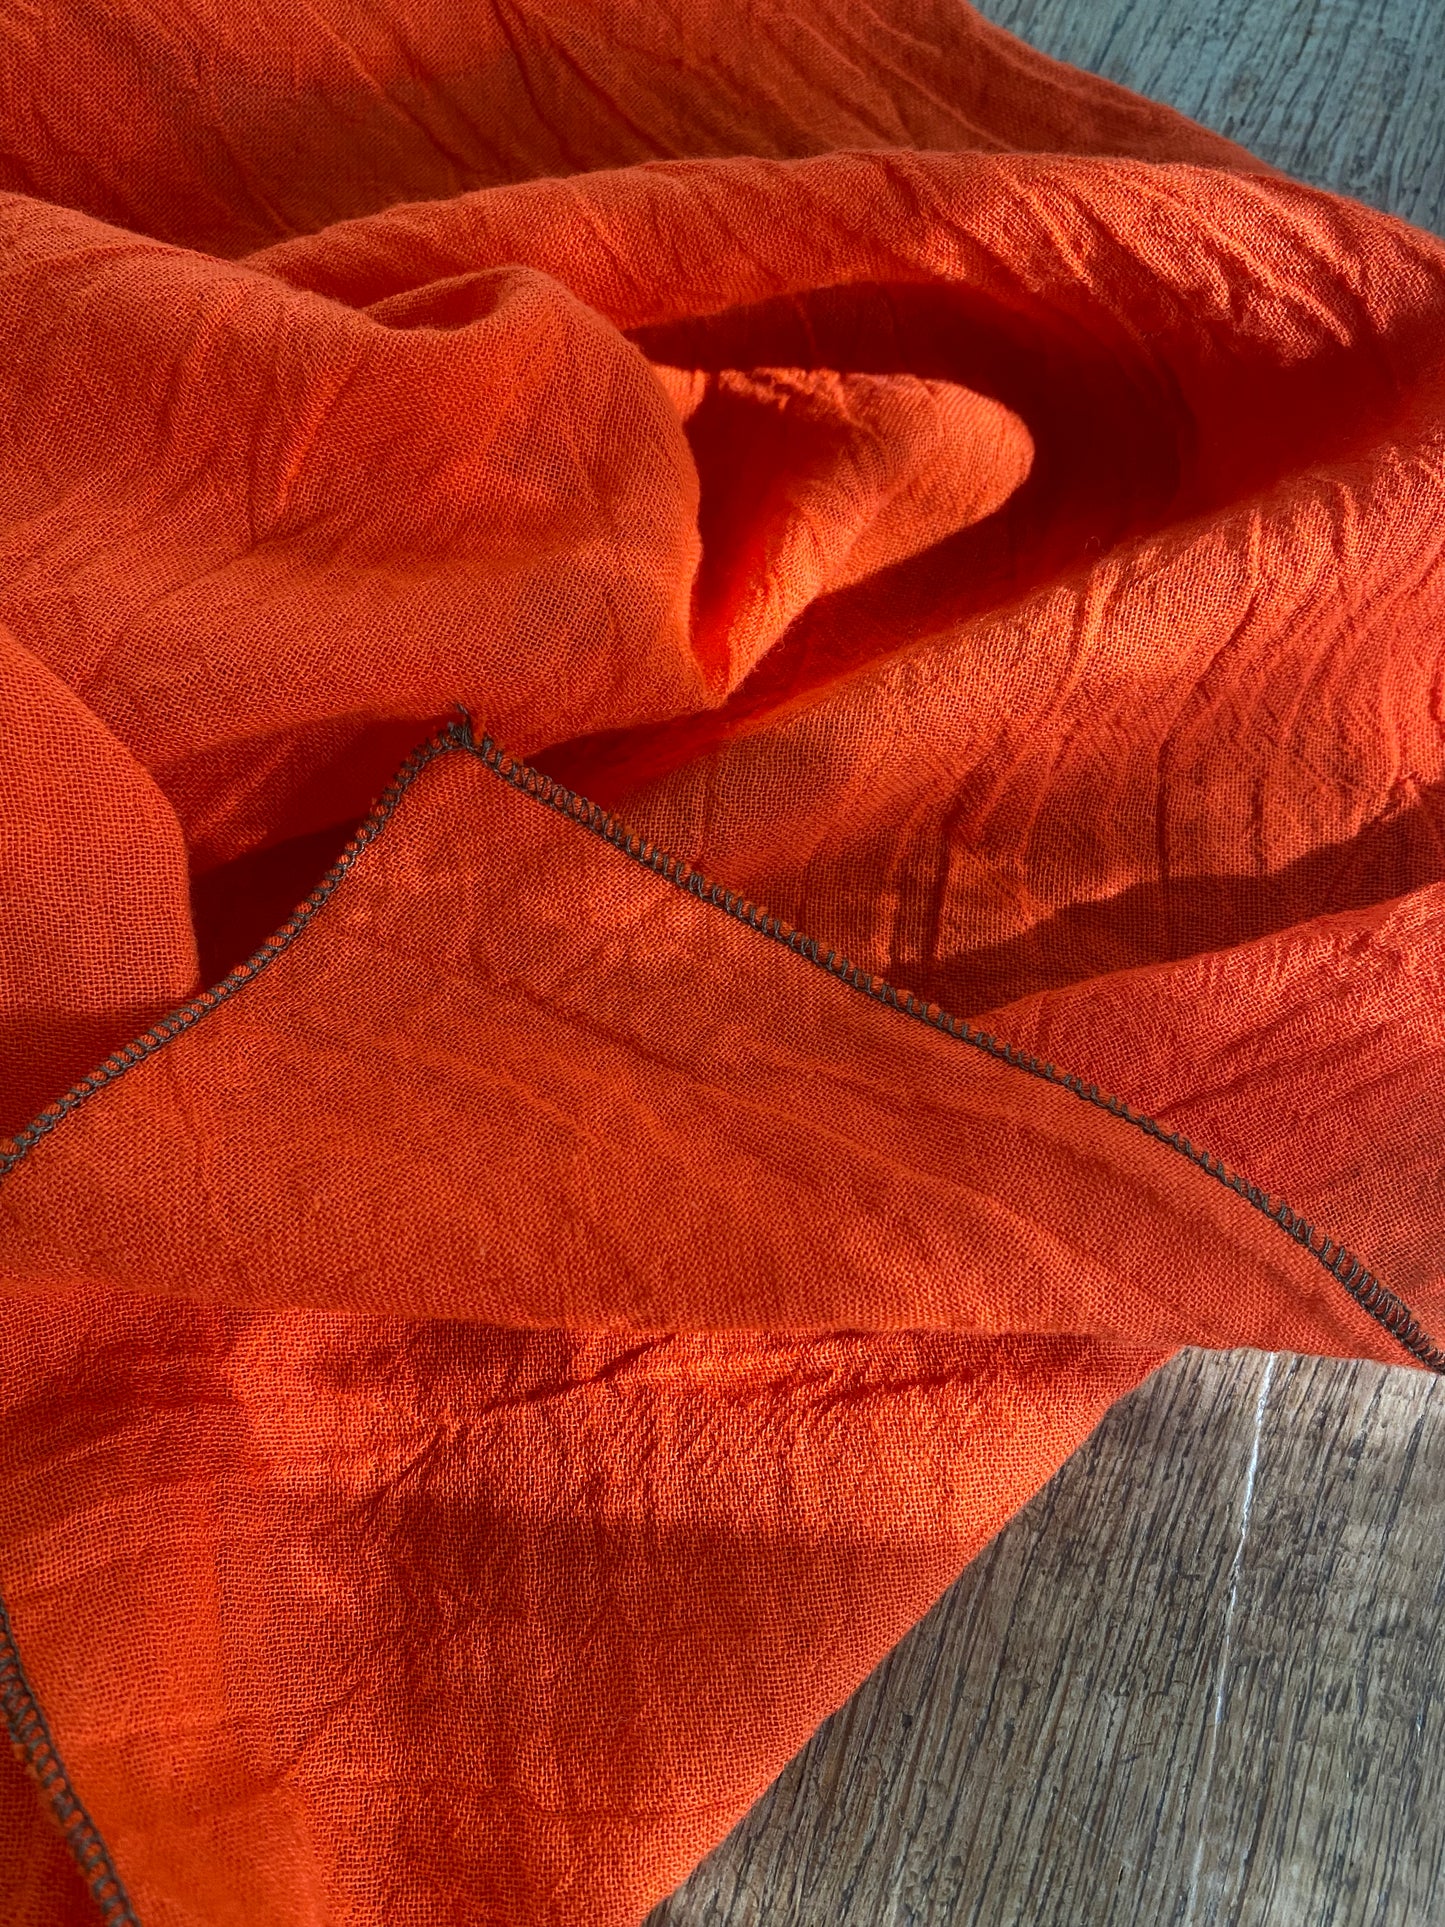 Mandarin Red sarong